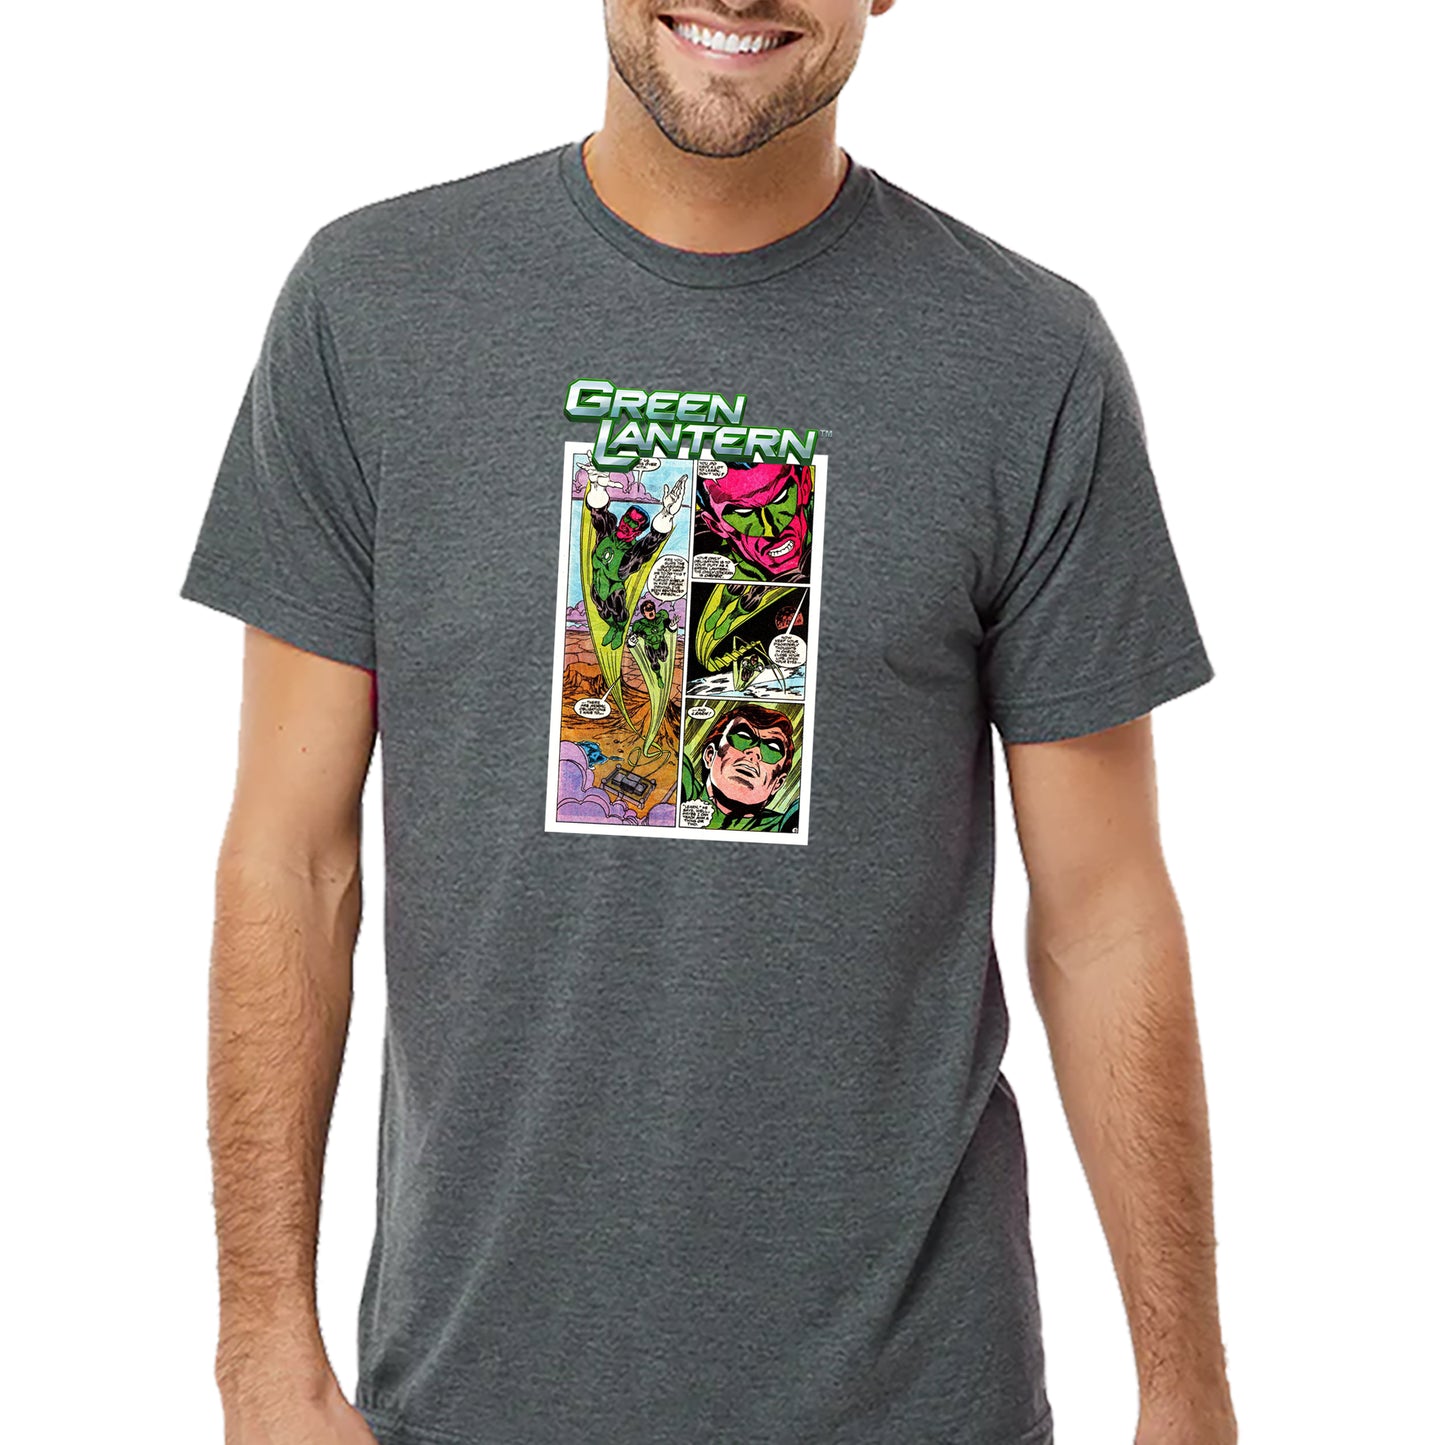 Green Lantern Comic T-shirt